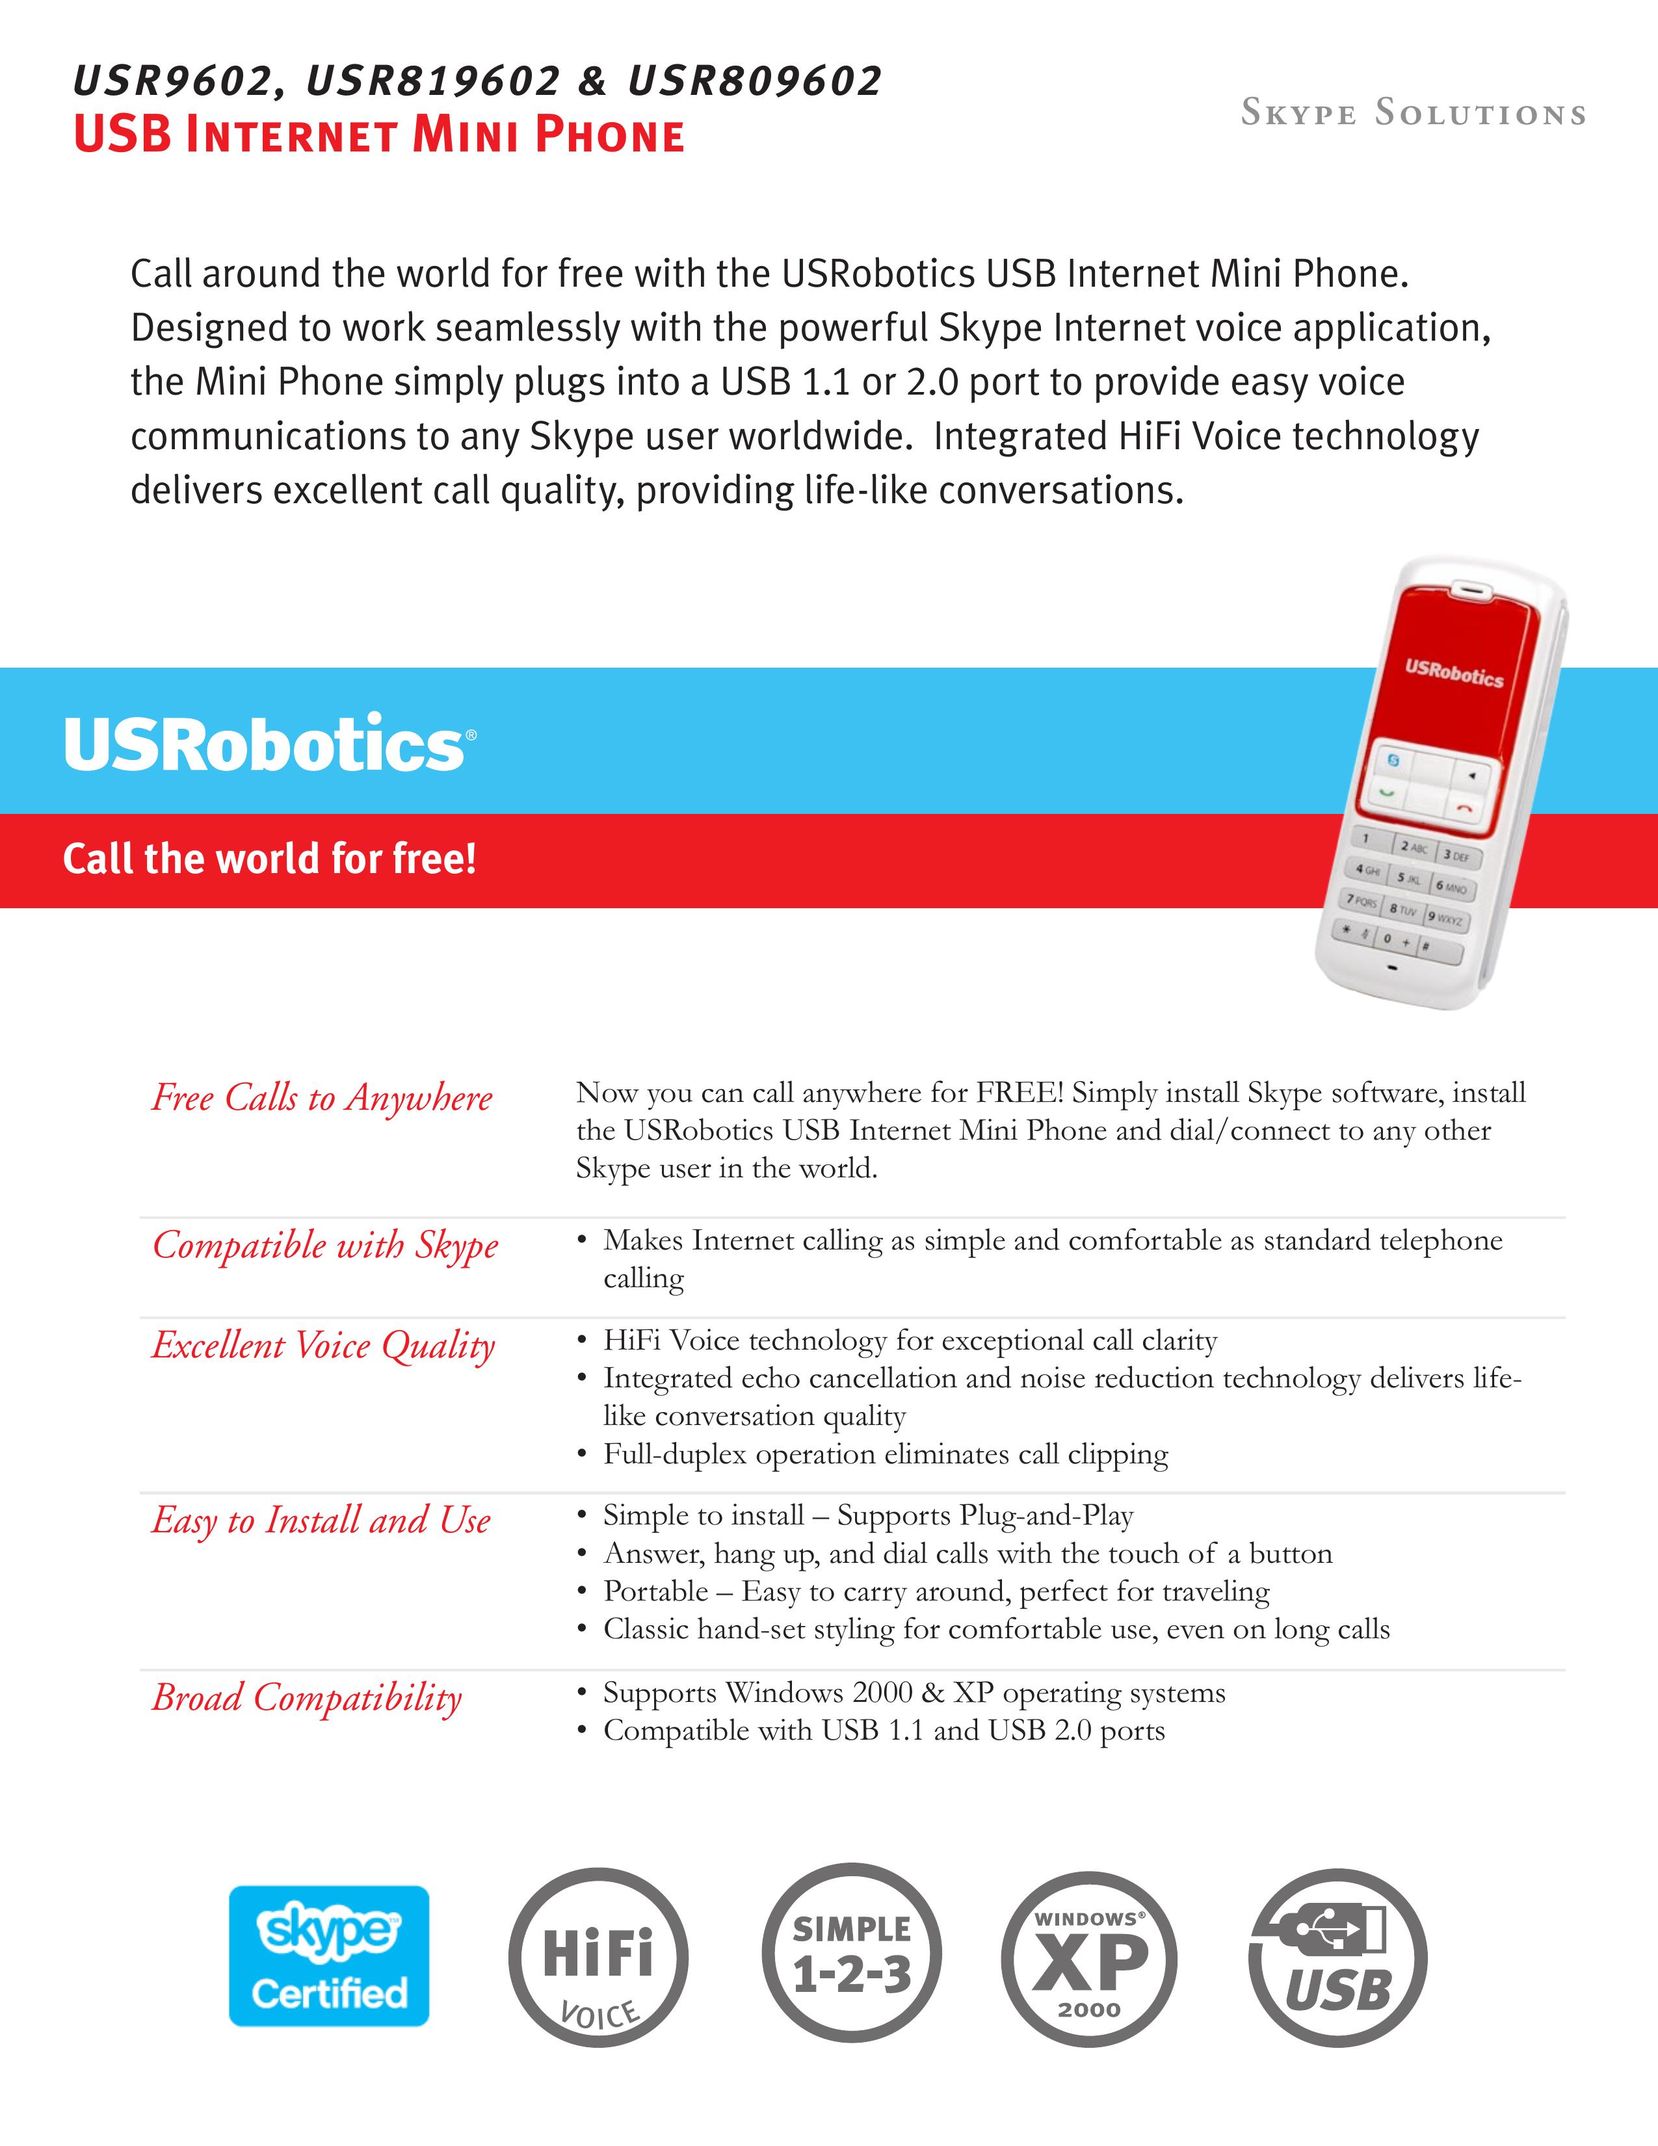 USRobotics USR819602 IP Phone User Manual